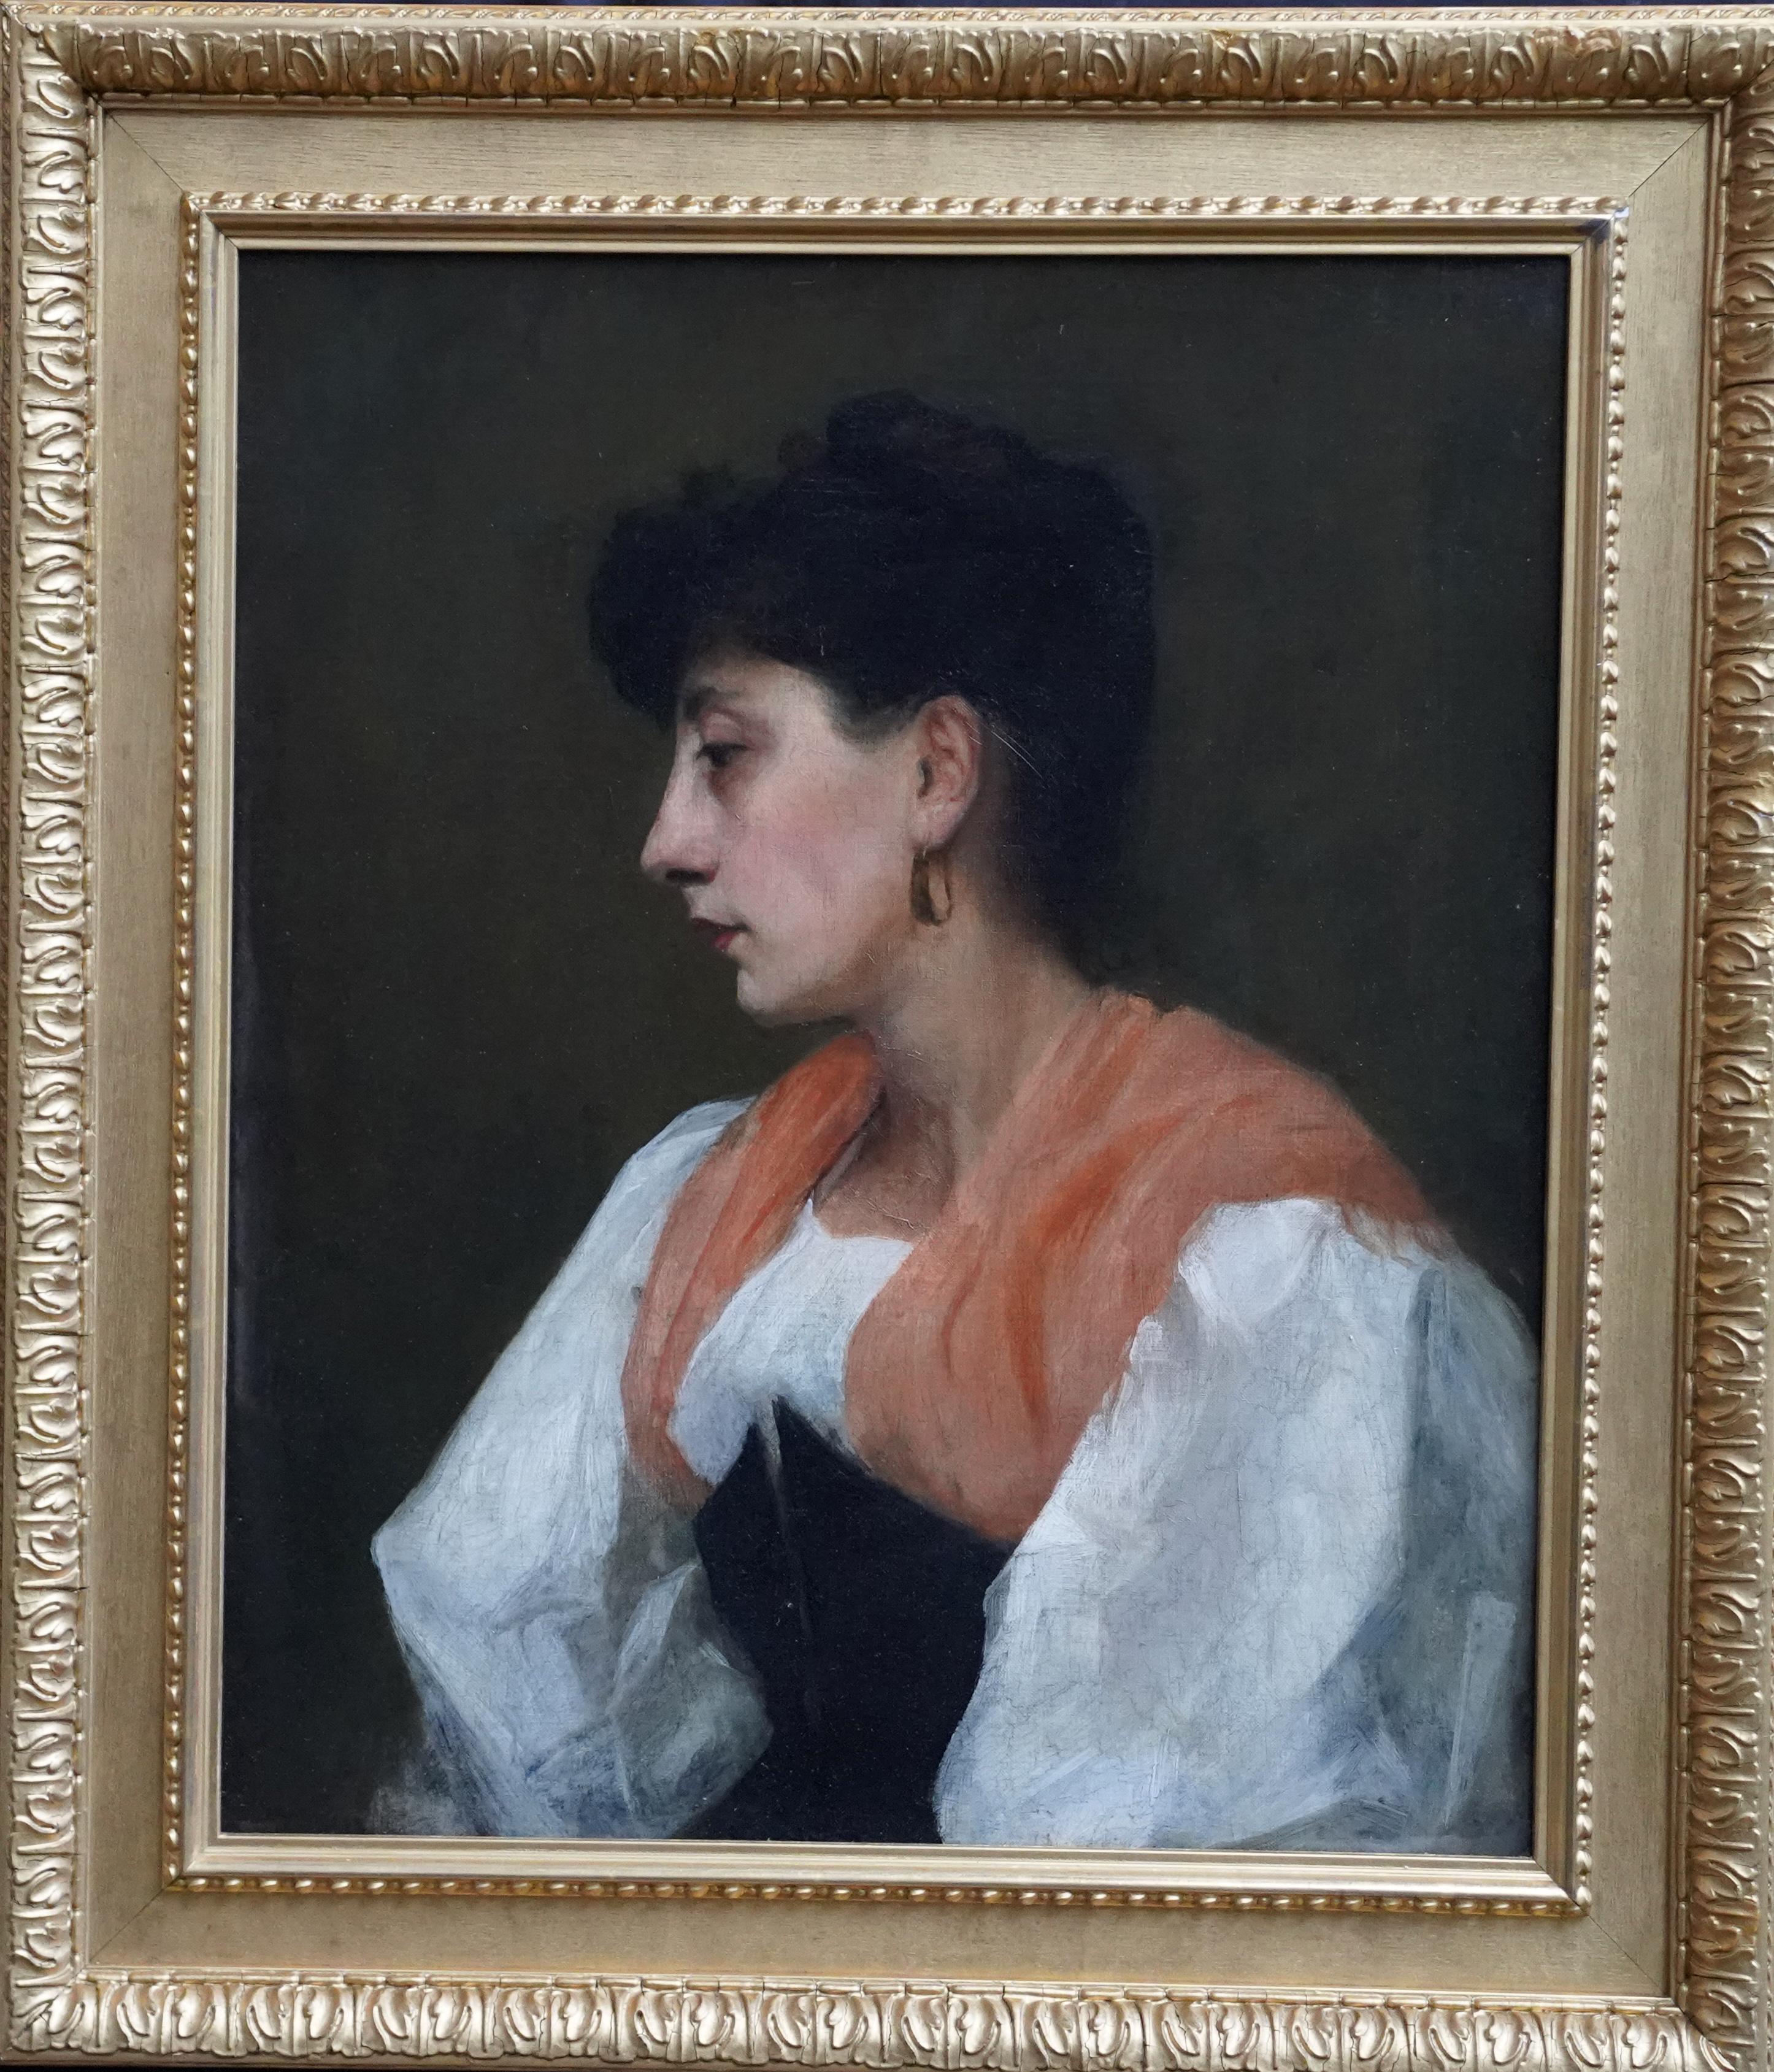 Ursula Wood (att) Portrait Painting - Portrait of a Lady in Orange Shawl - British Edwardian art portrait oil painting